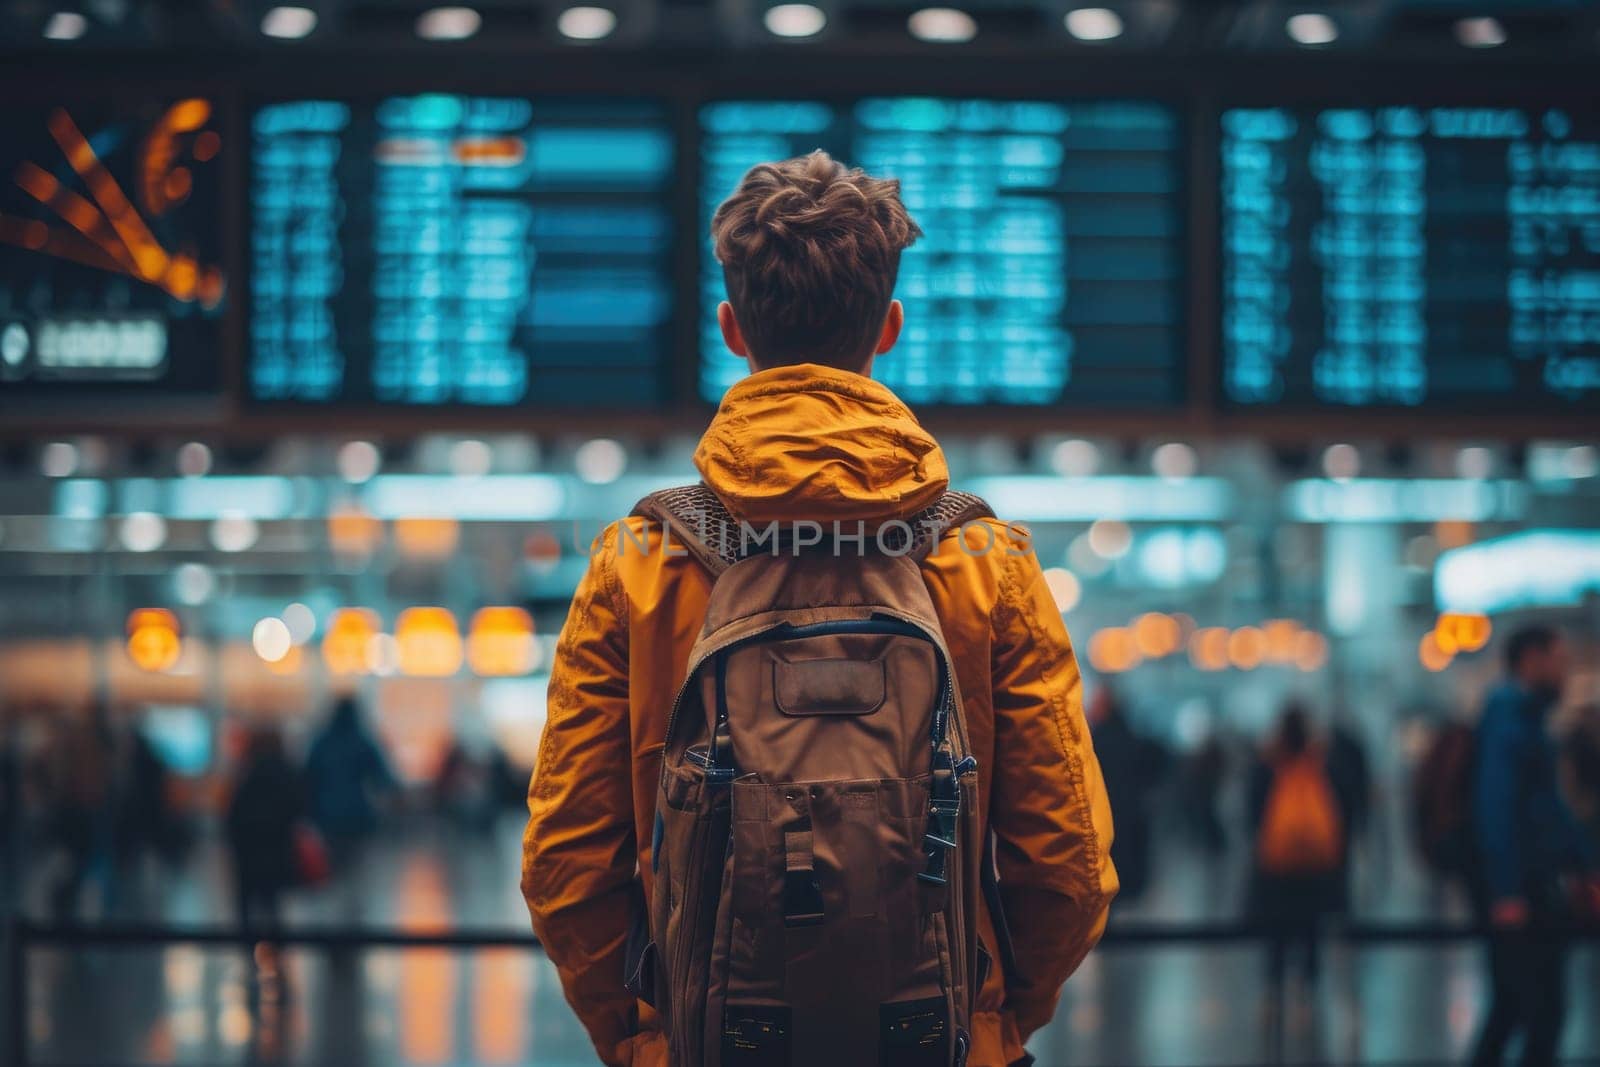 Traveler at airport terminal. Travel concept. Generative AI.